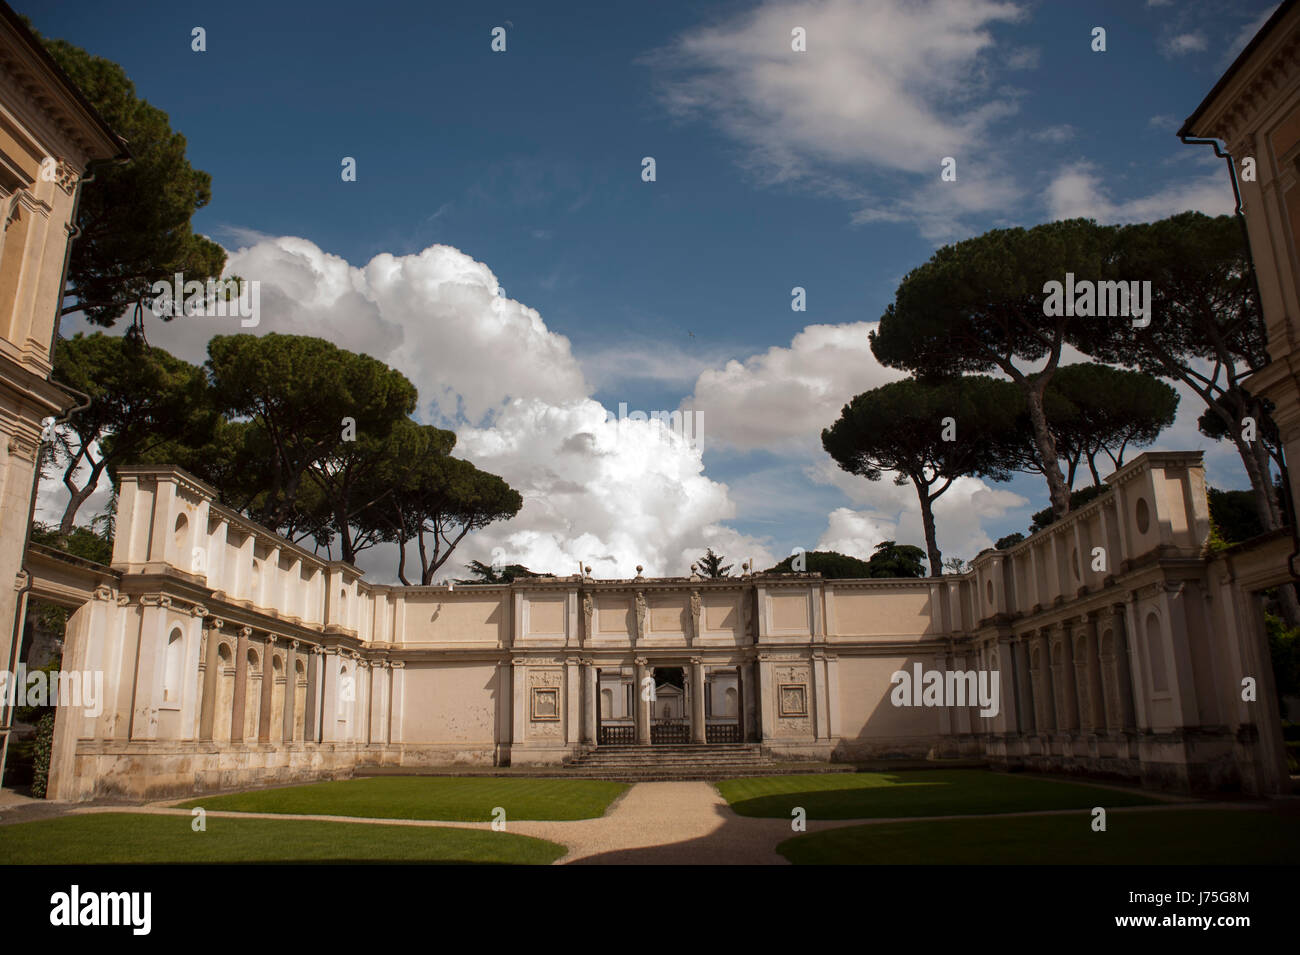 A view of a courtyard inside Villa Giulia in Rome Stock Photo